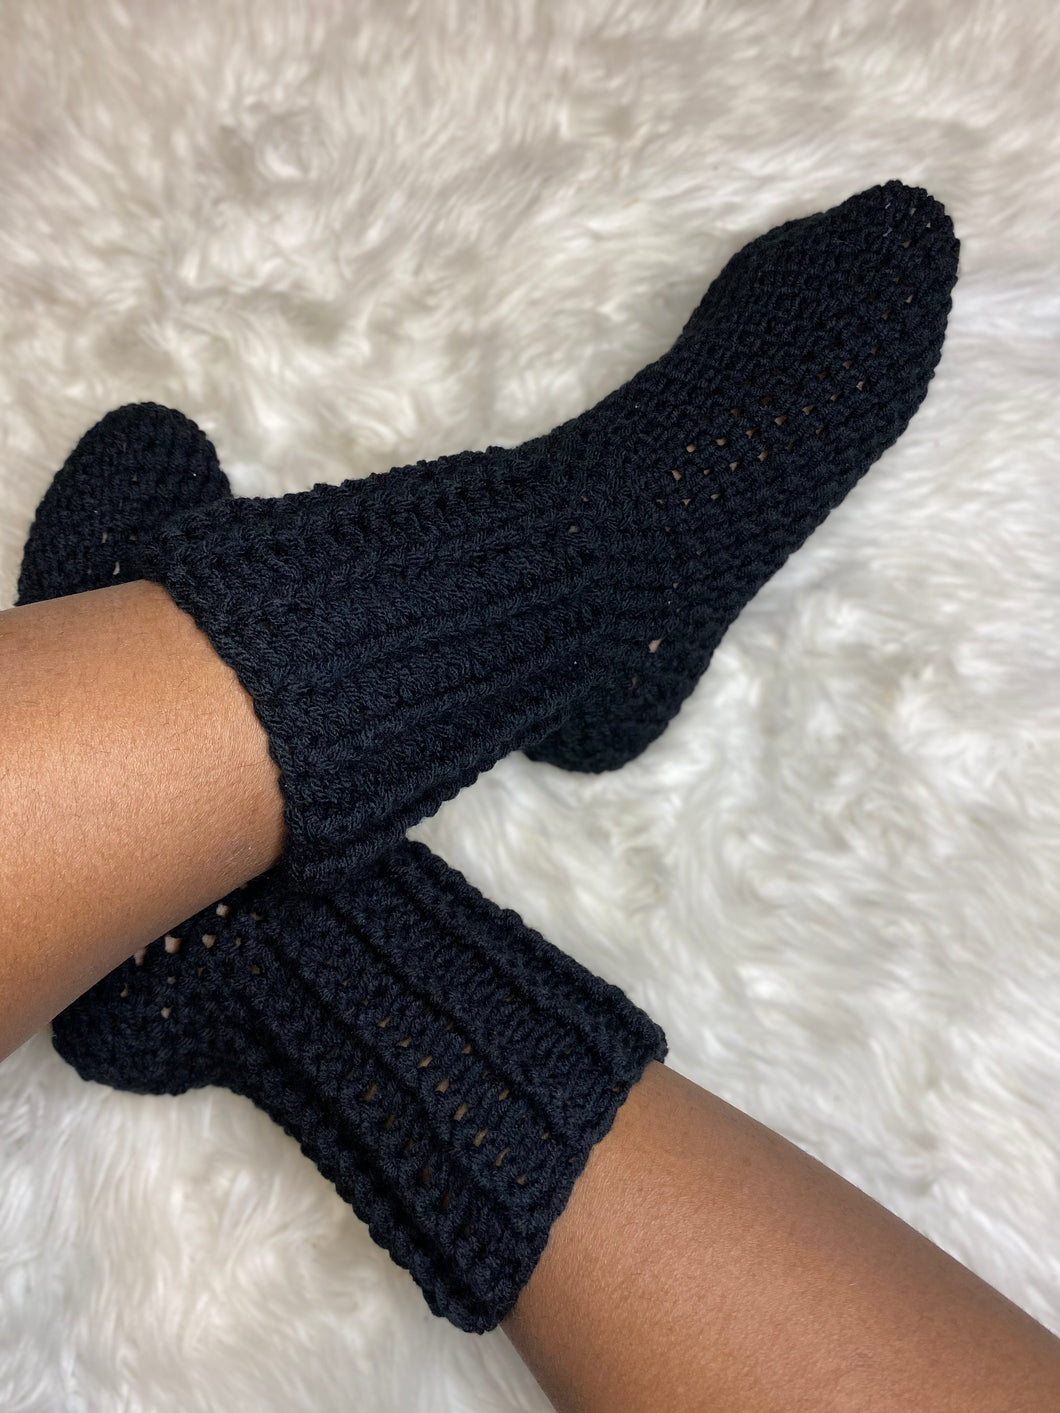 Crochet Crew Socks